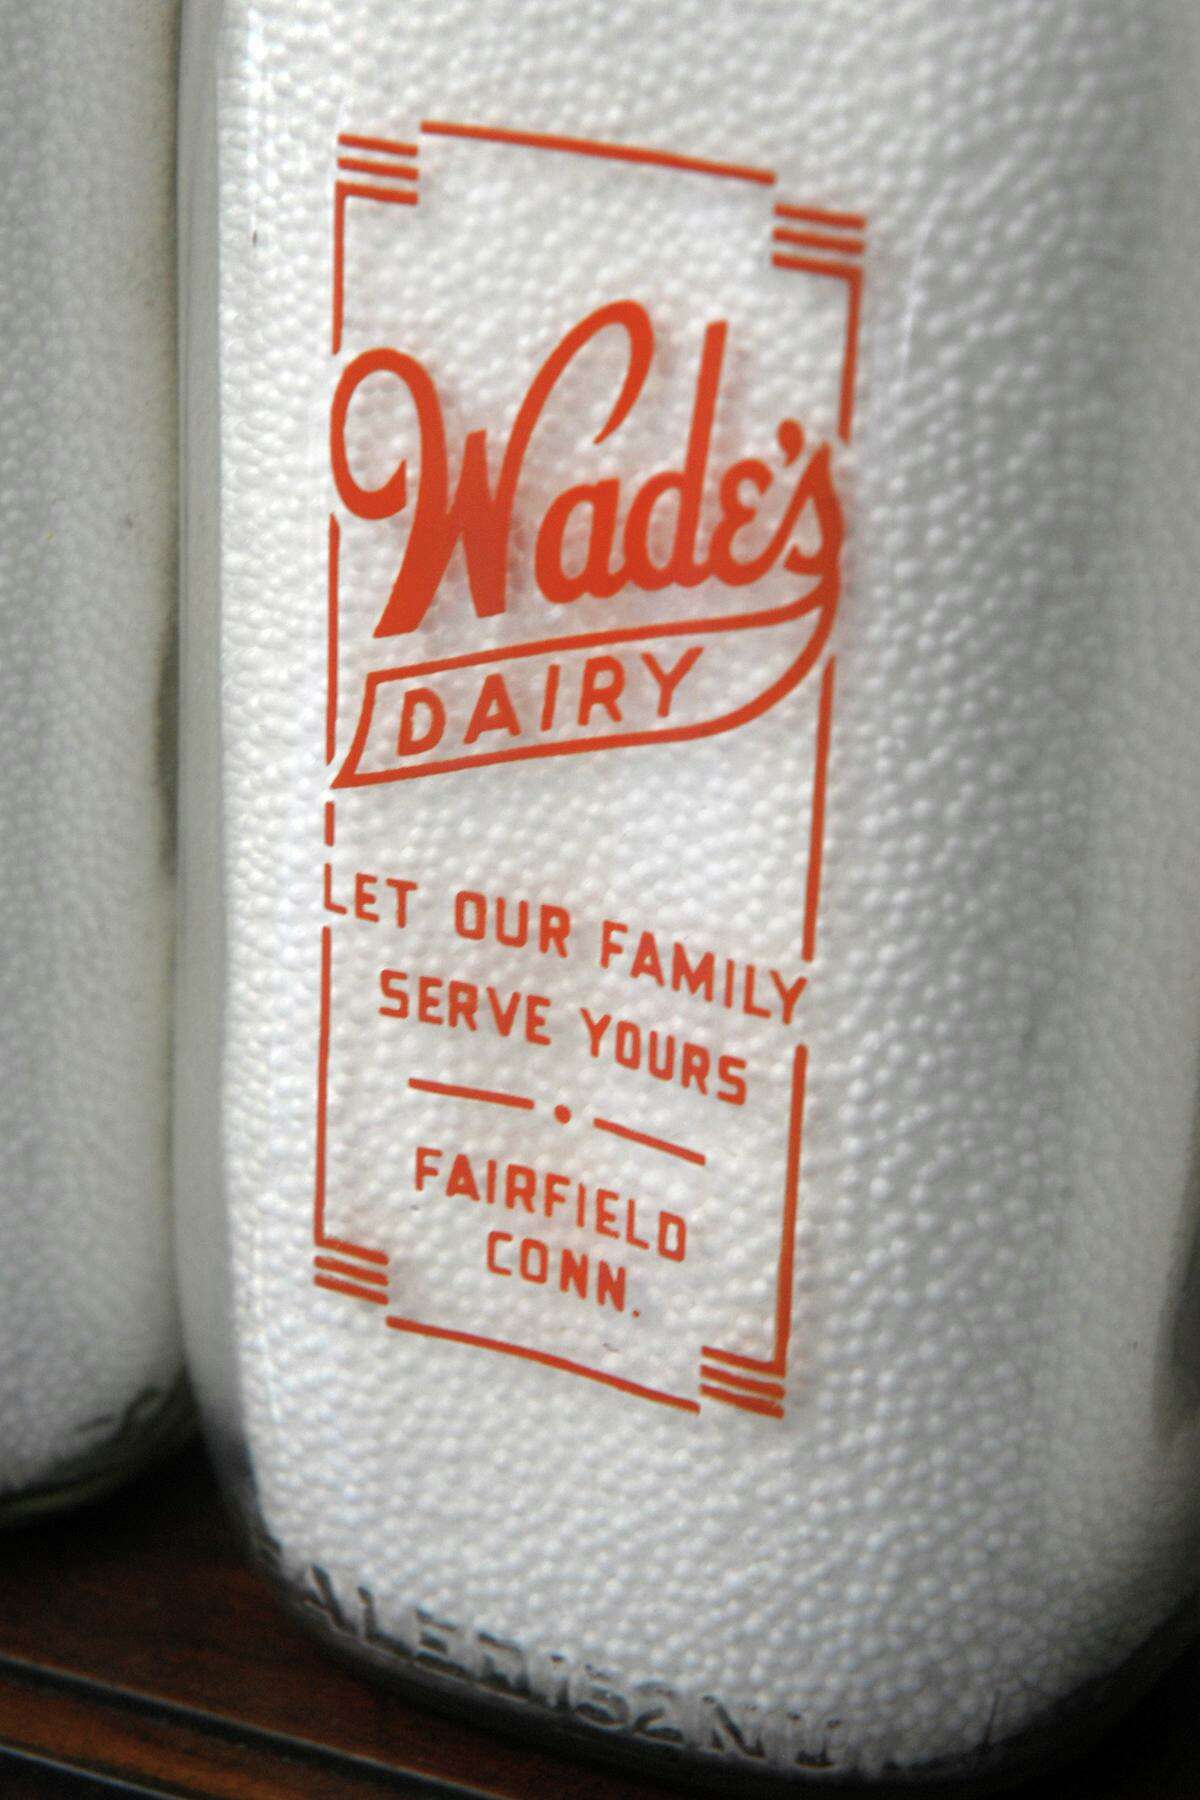 Antique milk jar from the collection of Doug Wade, of Wade’s Dairy in Bridgeport.